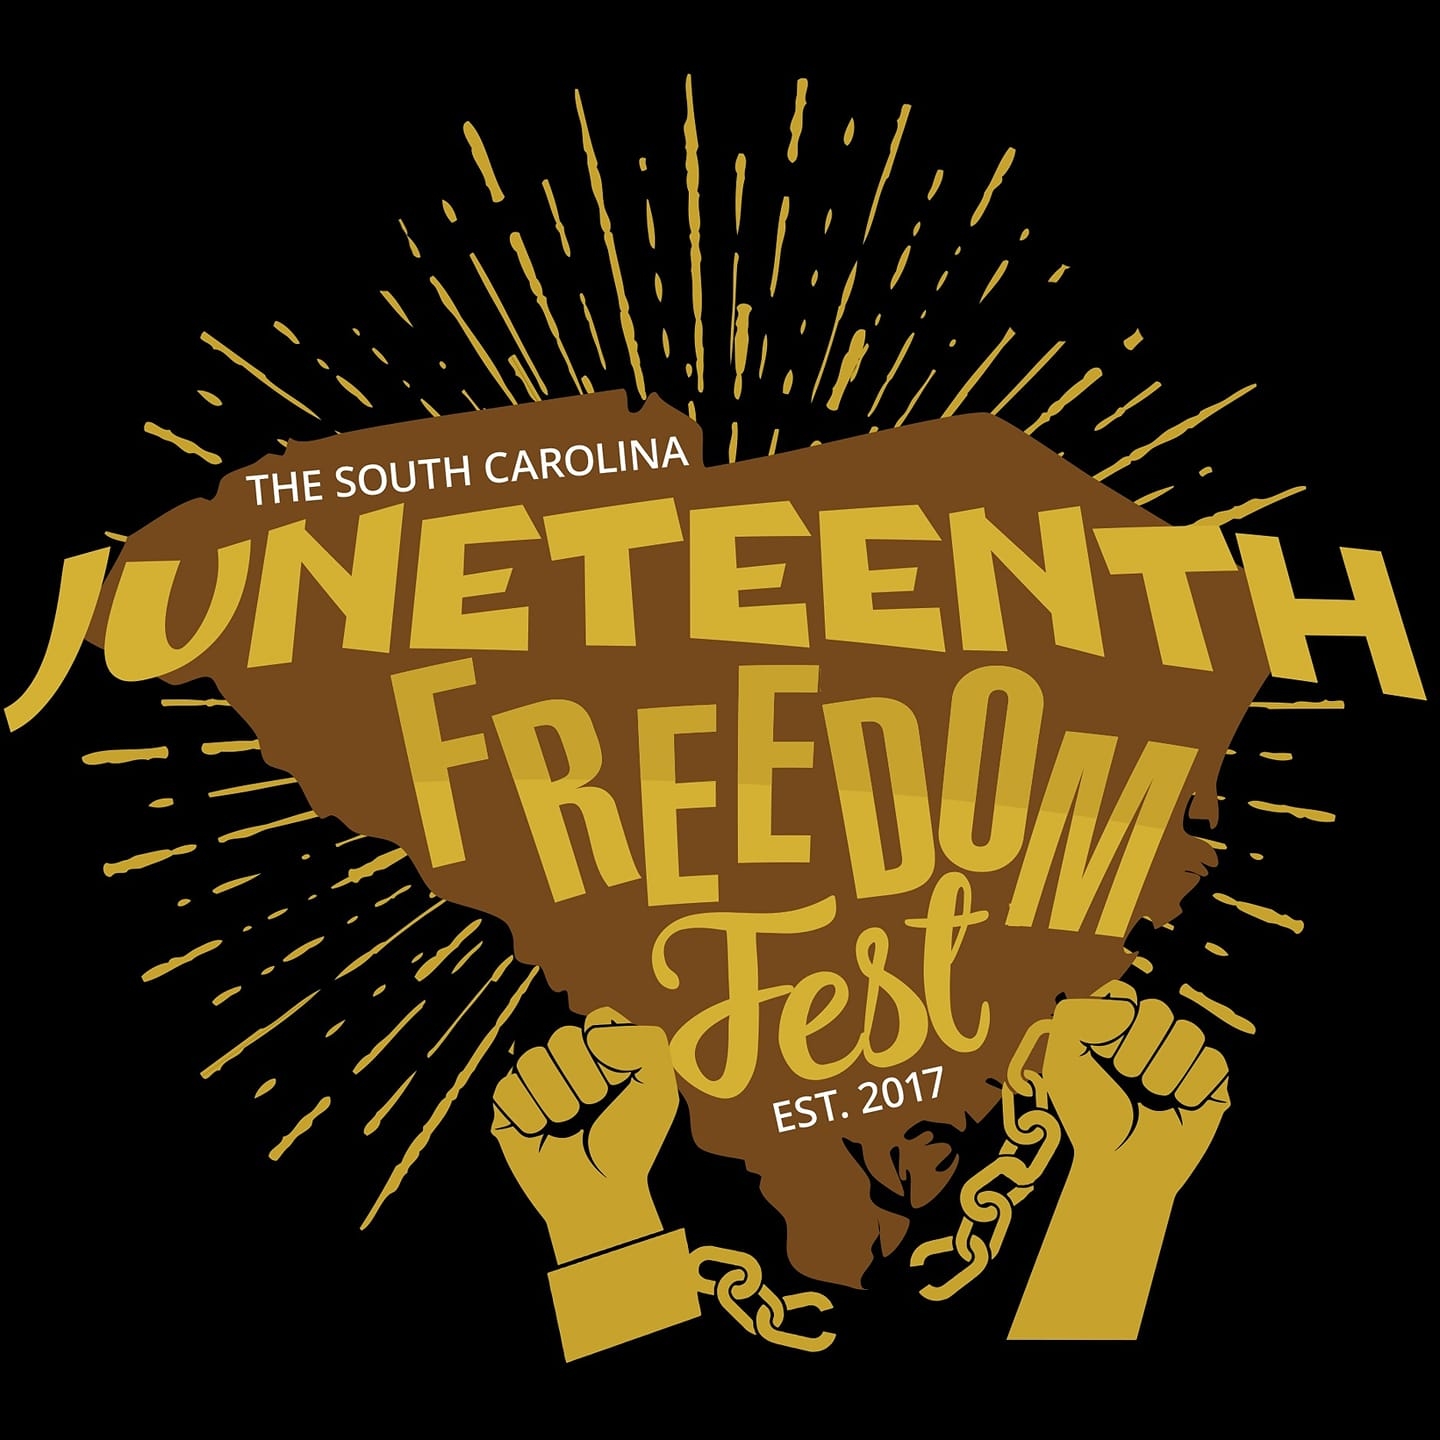 The South Carolina Juneteenth Freedom Fest Est 2017